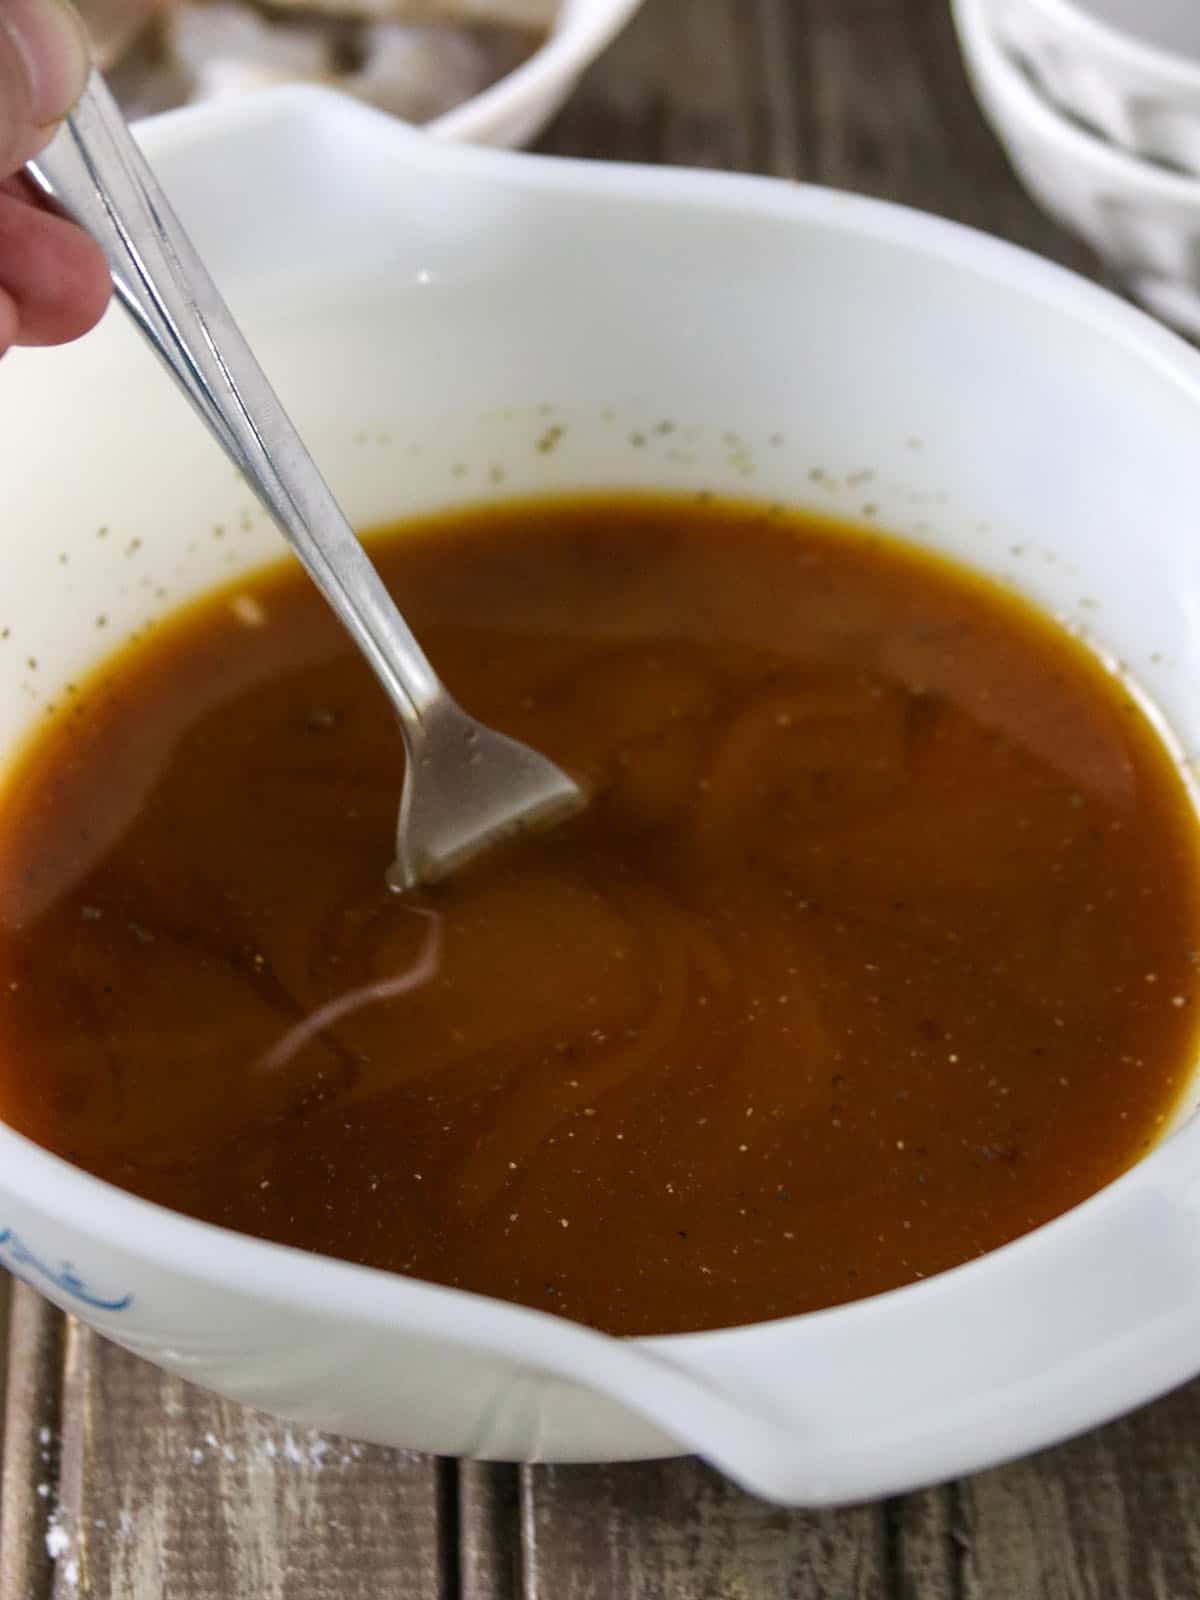 stirring stir fry sauce in a white bowl